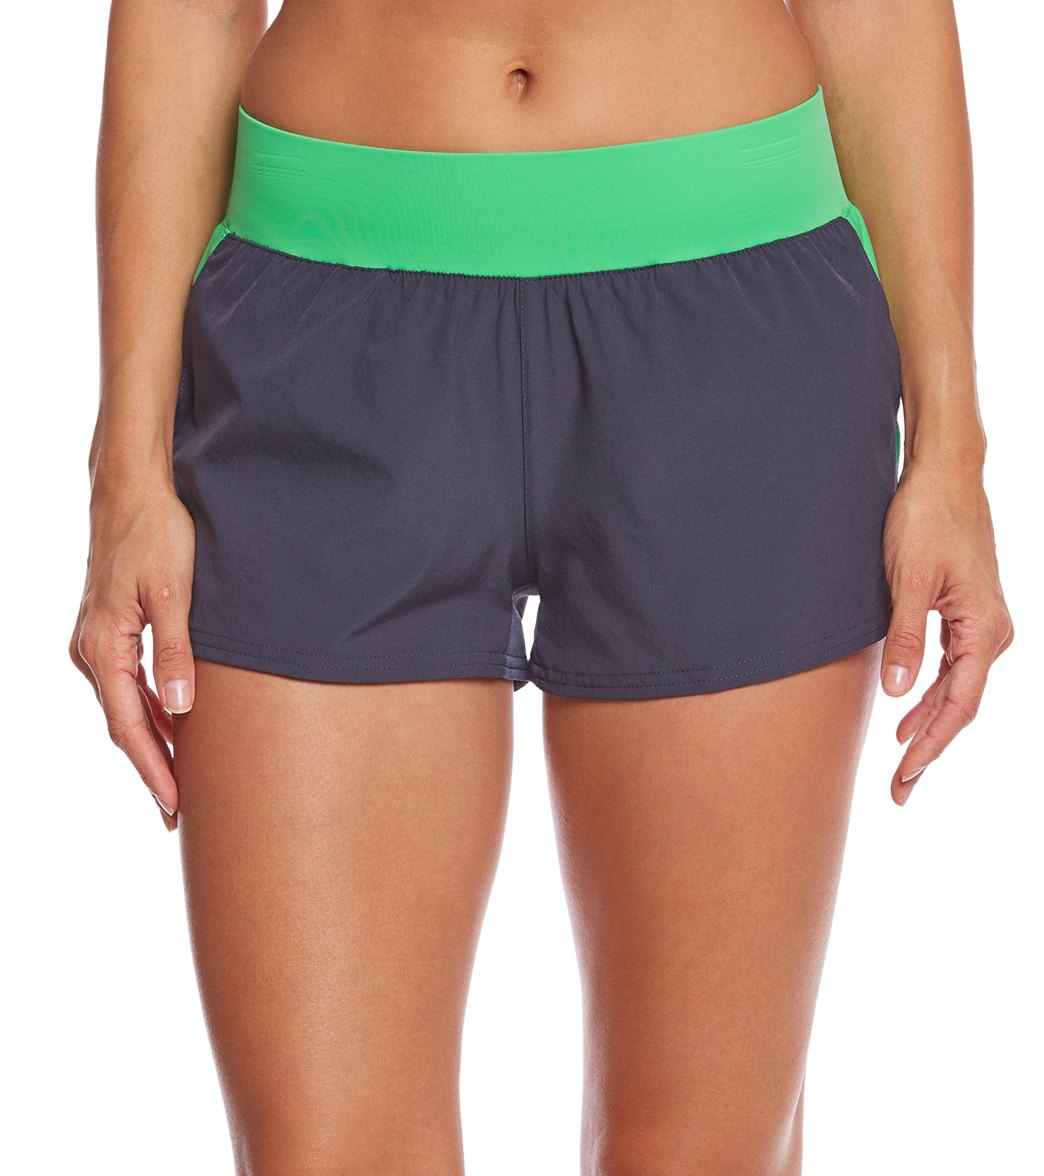 Speedo Women's Team Short - Green Large Polyester/Spandex - Swimoutlet.com